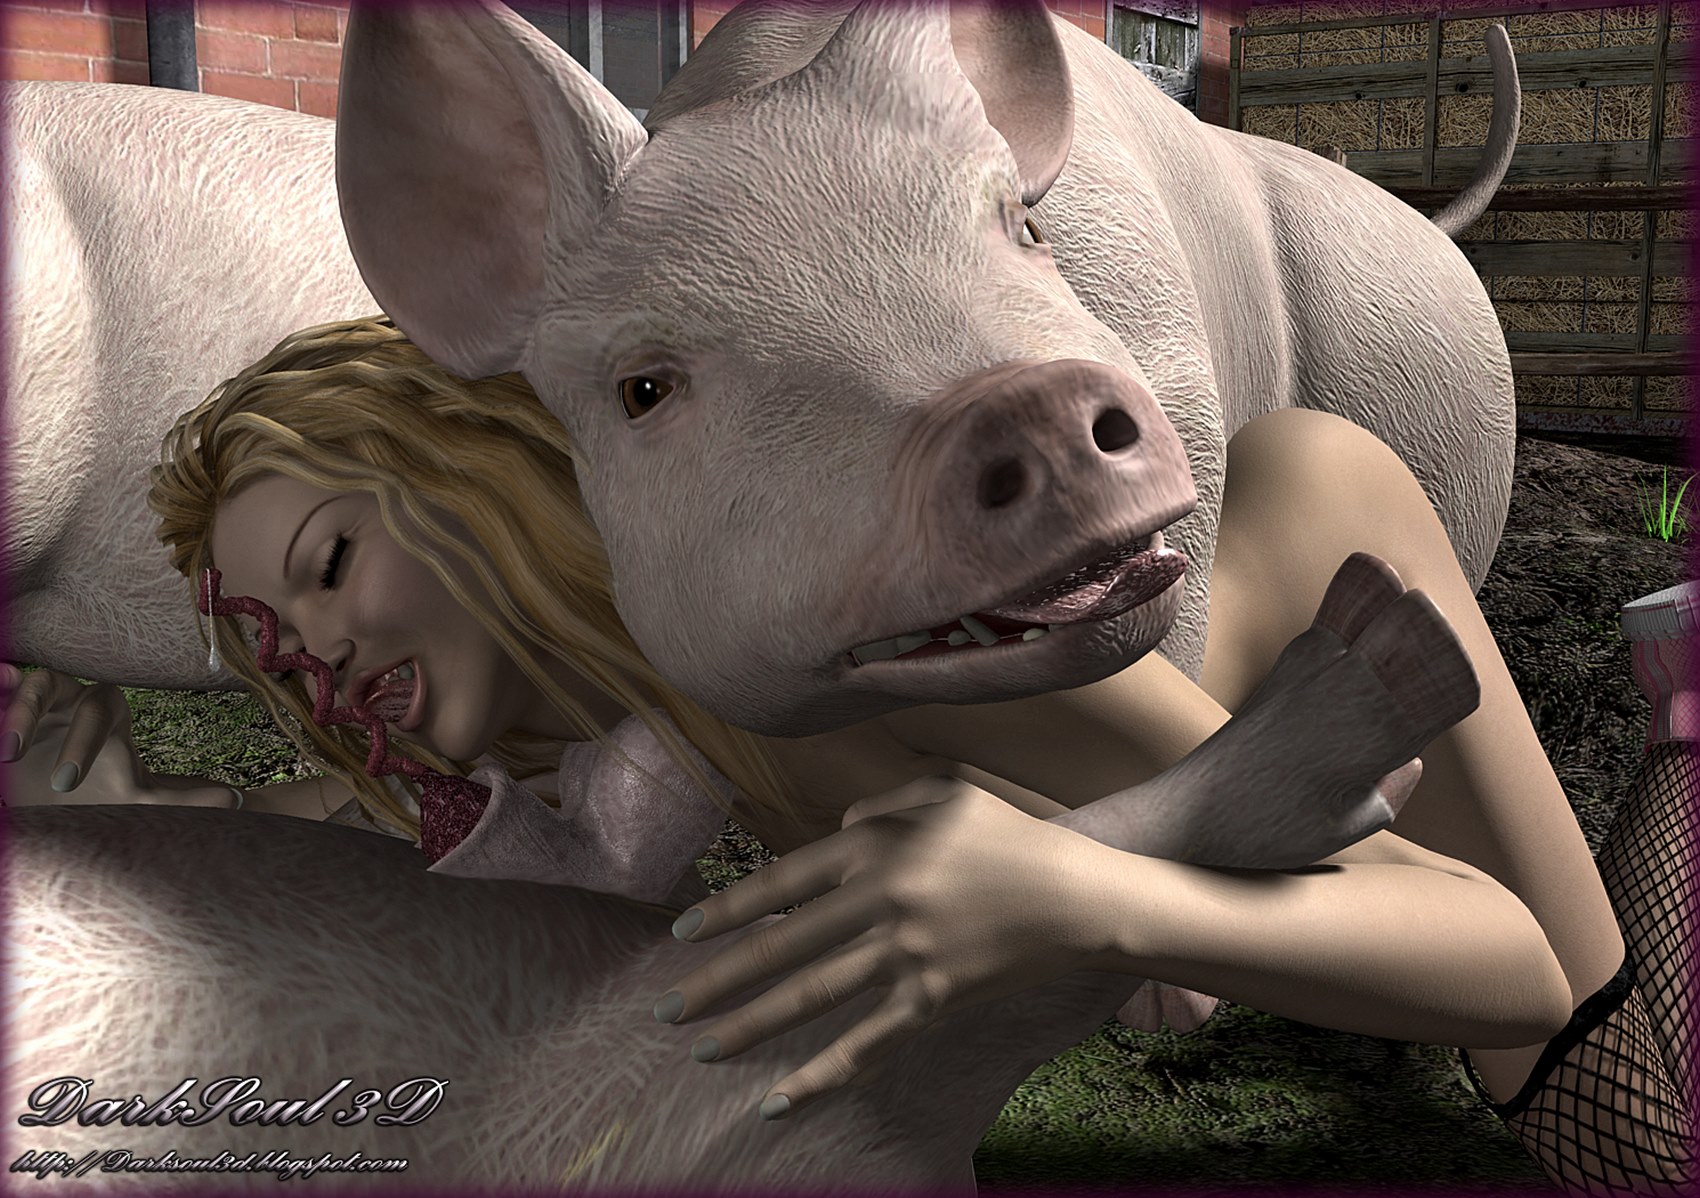 soul3d - Beastly Vignettes Teenage Fuck Pig.